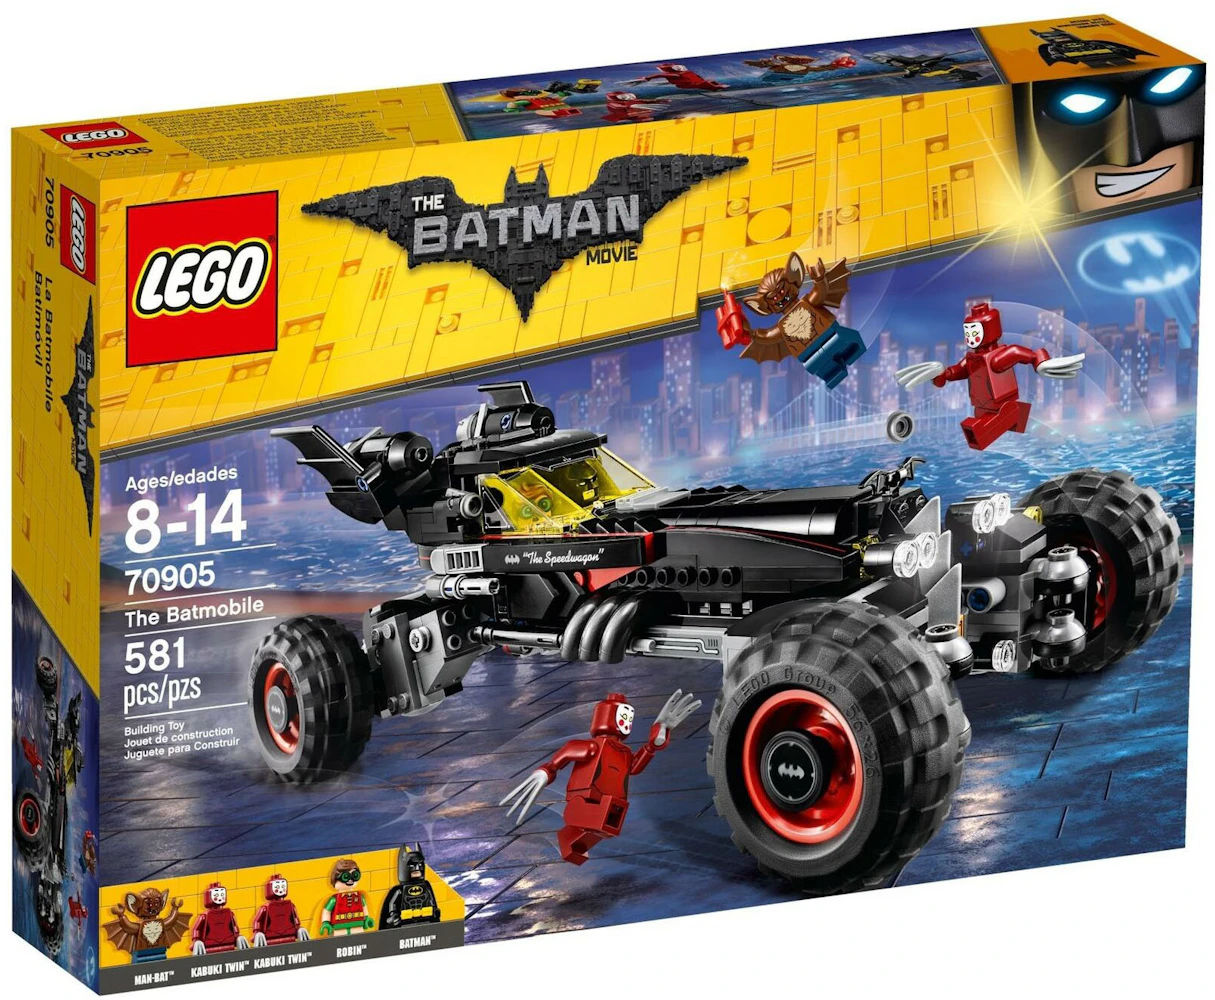 https://images.stockx.com/images/LEGO-The-LEGO-Batman-Movie-The-Batmobile-Set-70905-V4.jpg?fit=fill&bg=FFFFFF&w=700&h=500&fm=webp&auto=compress&q=90&dpr=2&trim=color&updated_at=1643665528